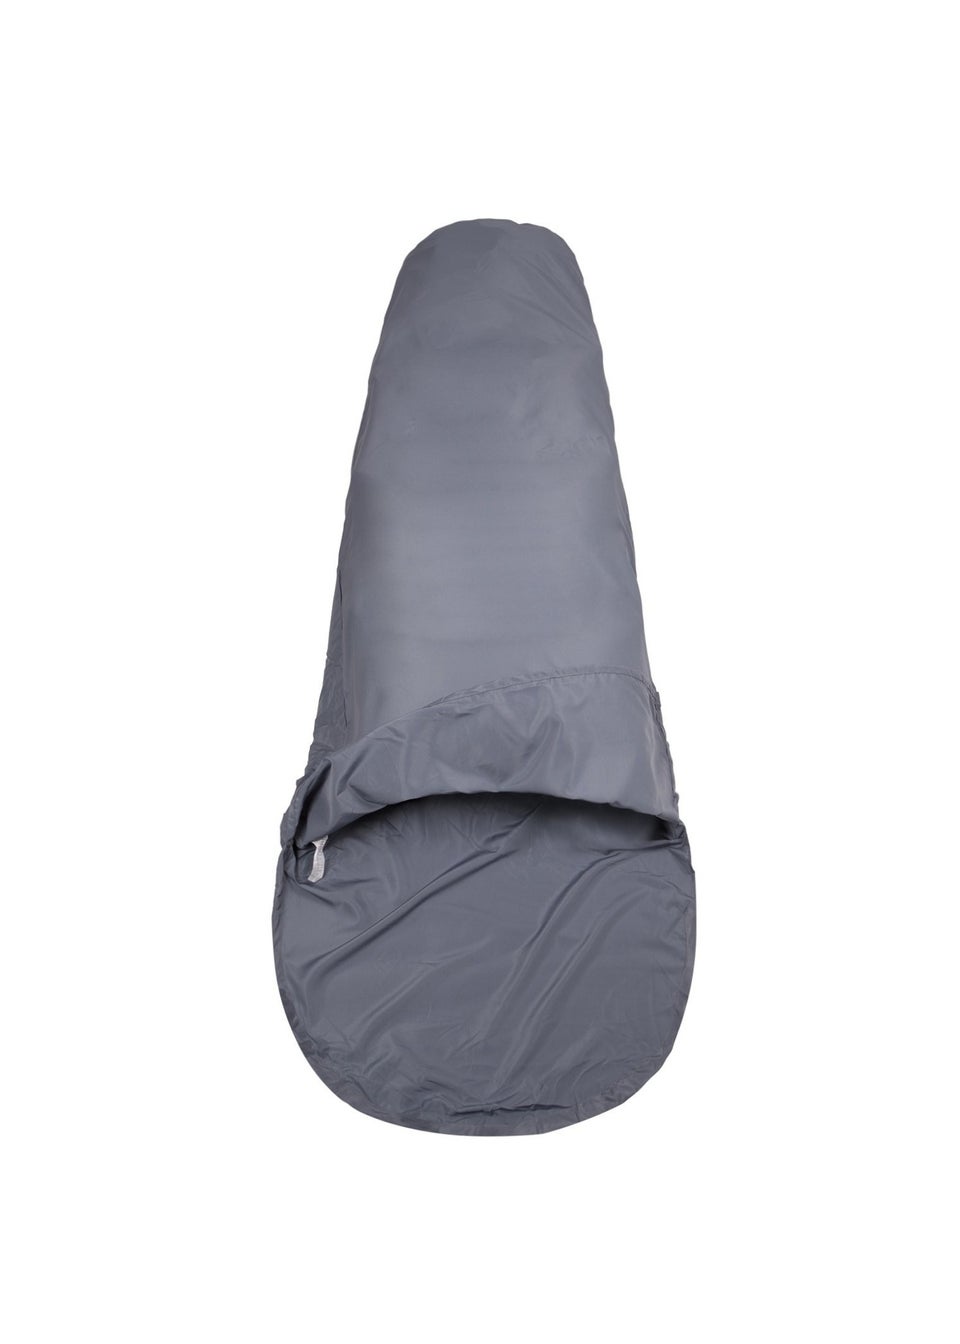 Mountain Warehouse Grey Polycotton Mummy Sleeping Bag Liner